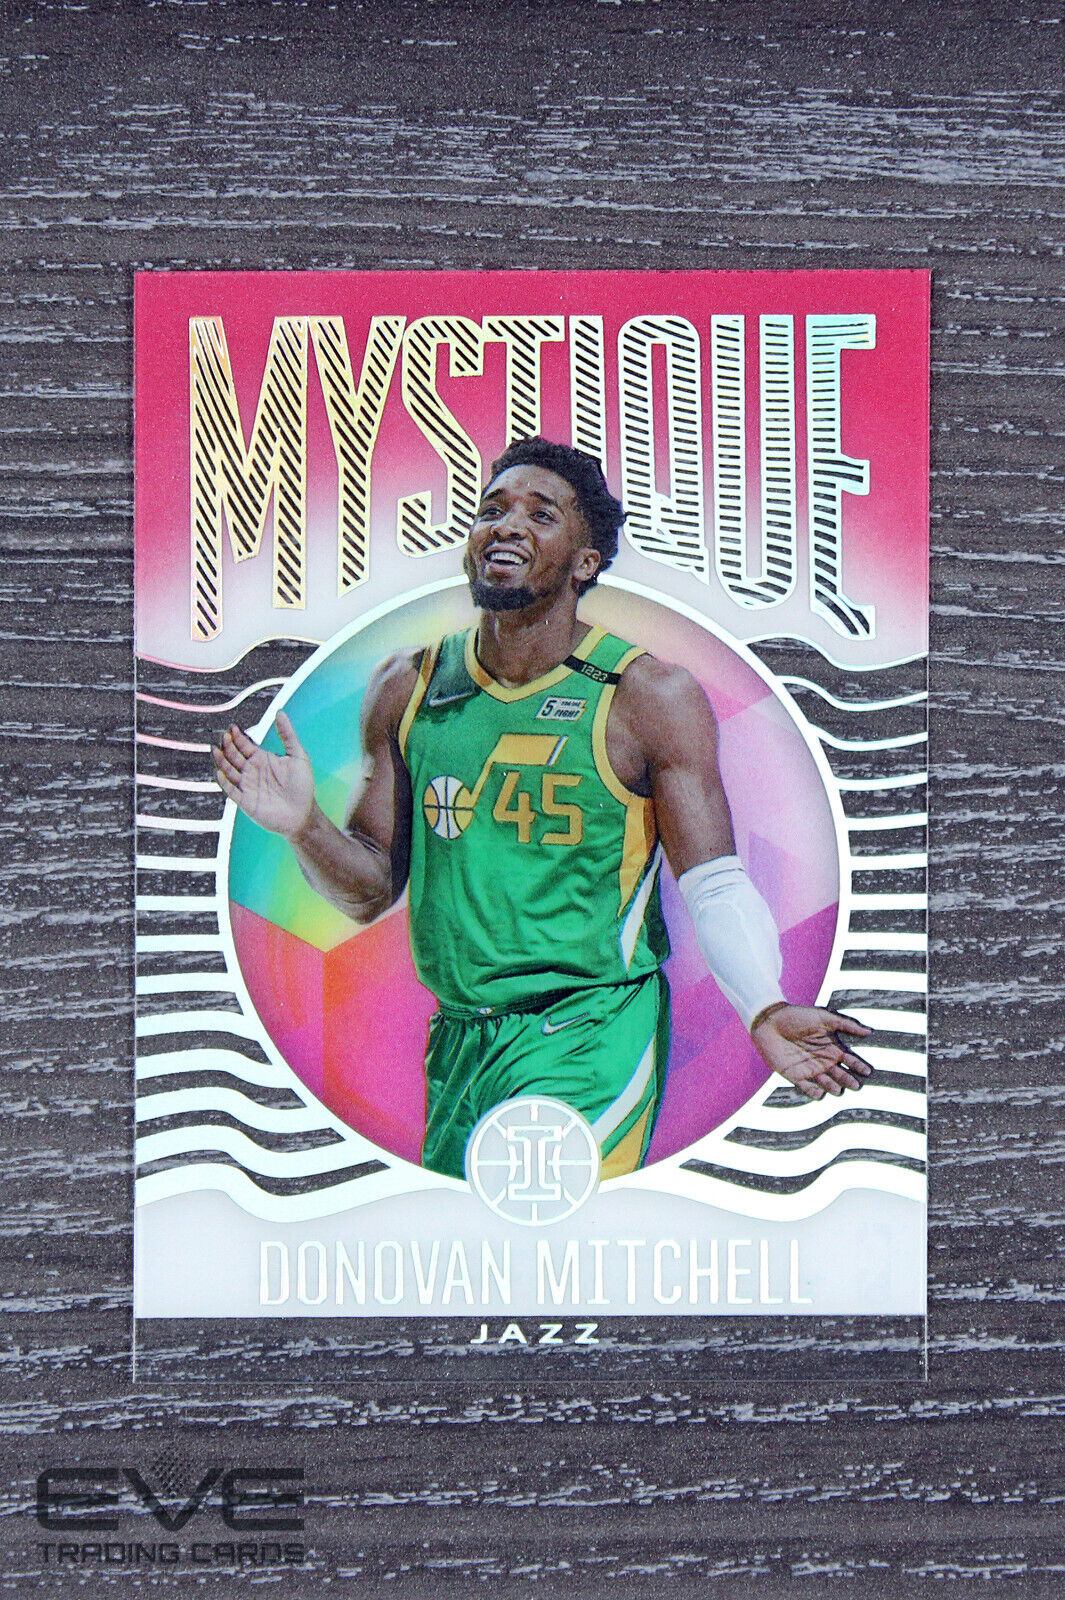 2020-21 Panini Illusions NBA Card #6 Donovan Mitchell Mystique Acetate Pink NM/M